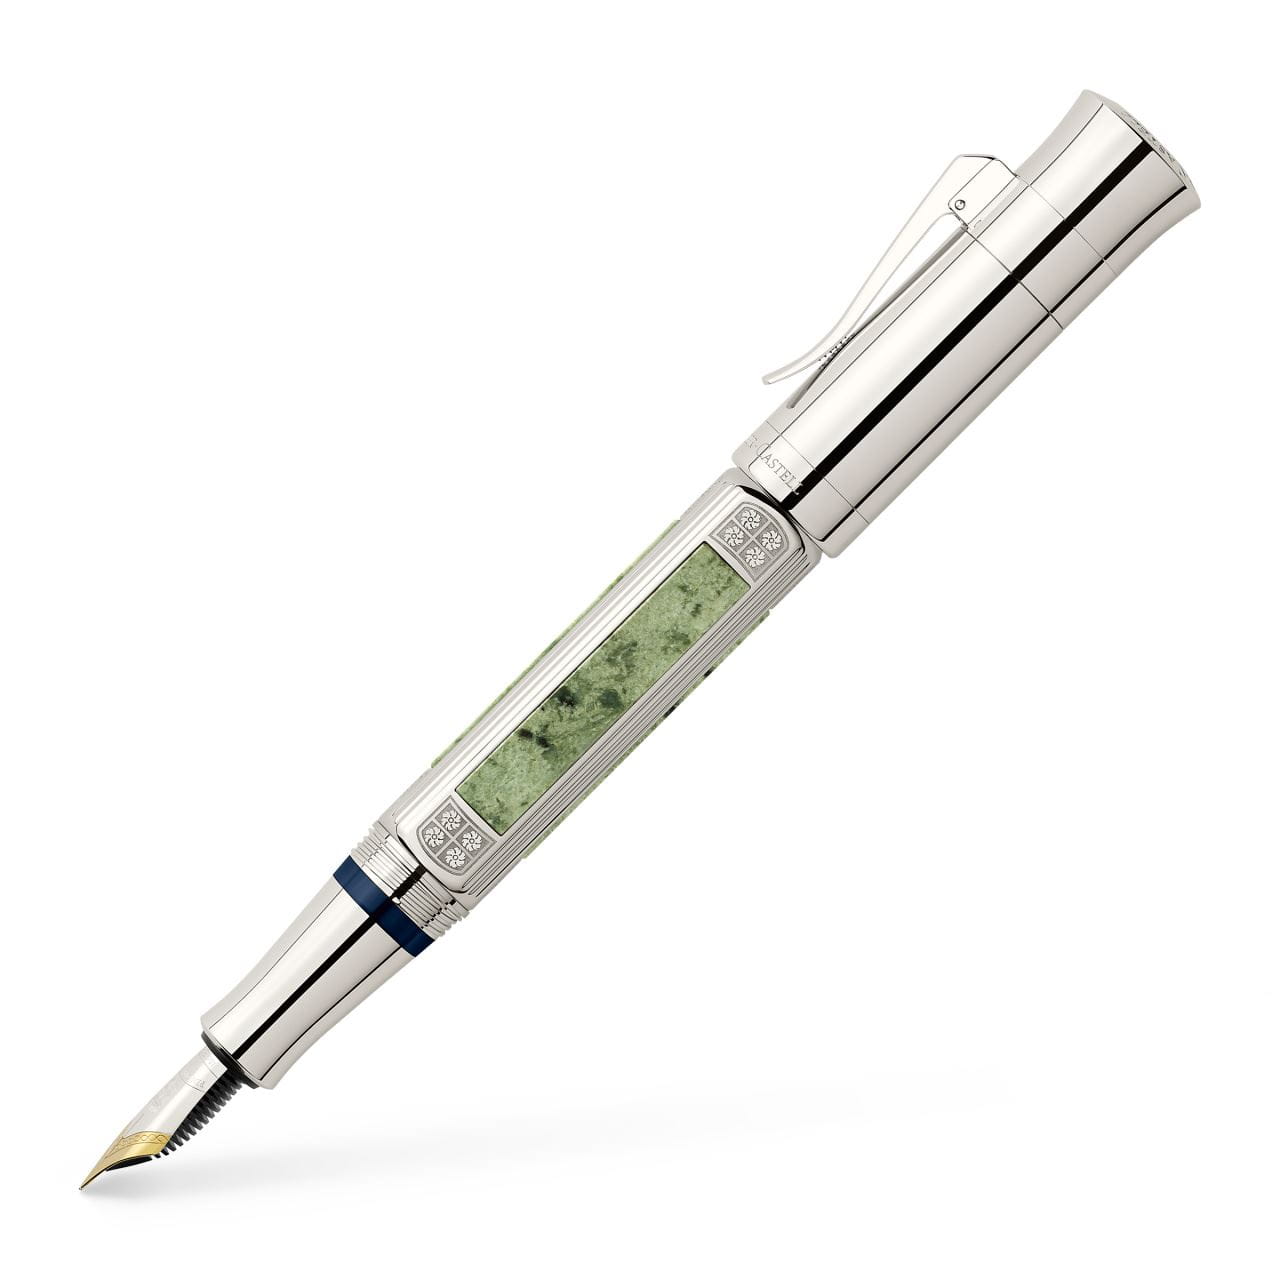 Graf-von-Faber-Castell - Penna stilografica, Pen of the Year 2015 platinum-plated